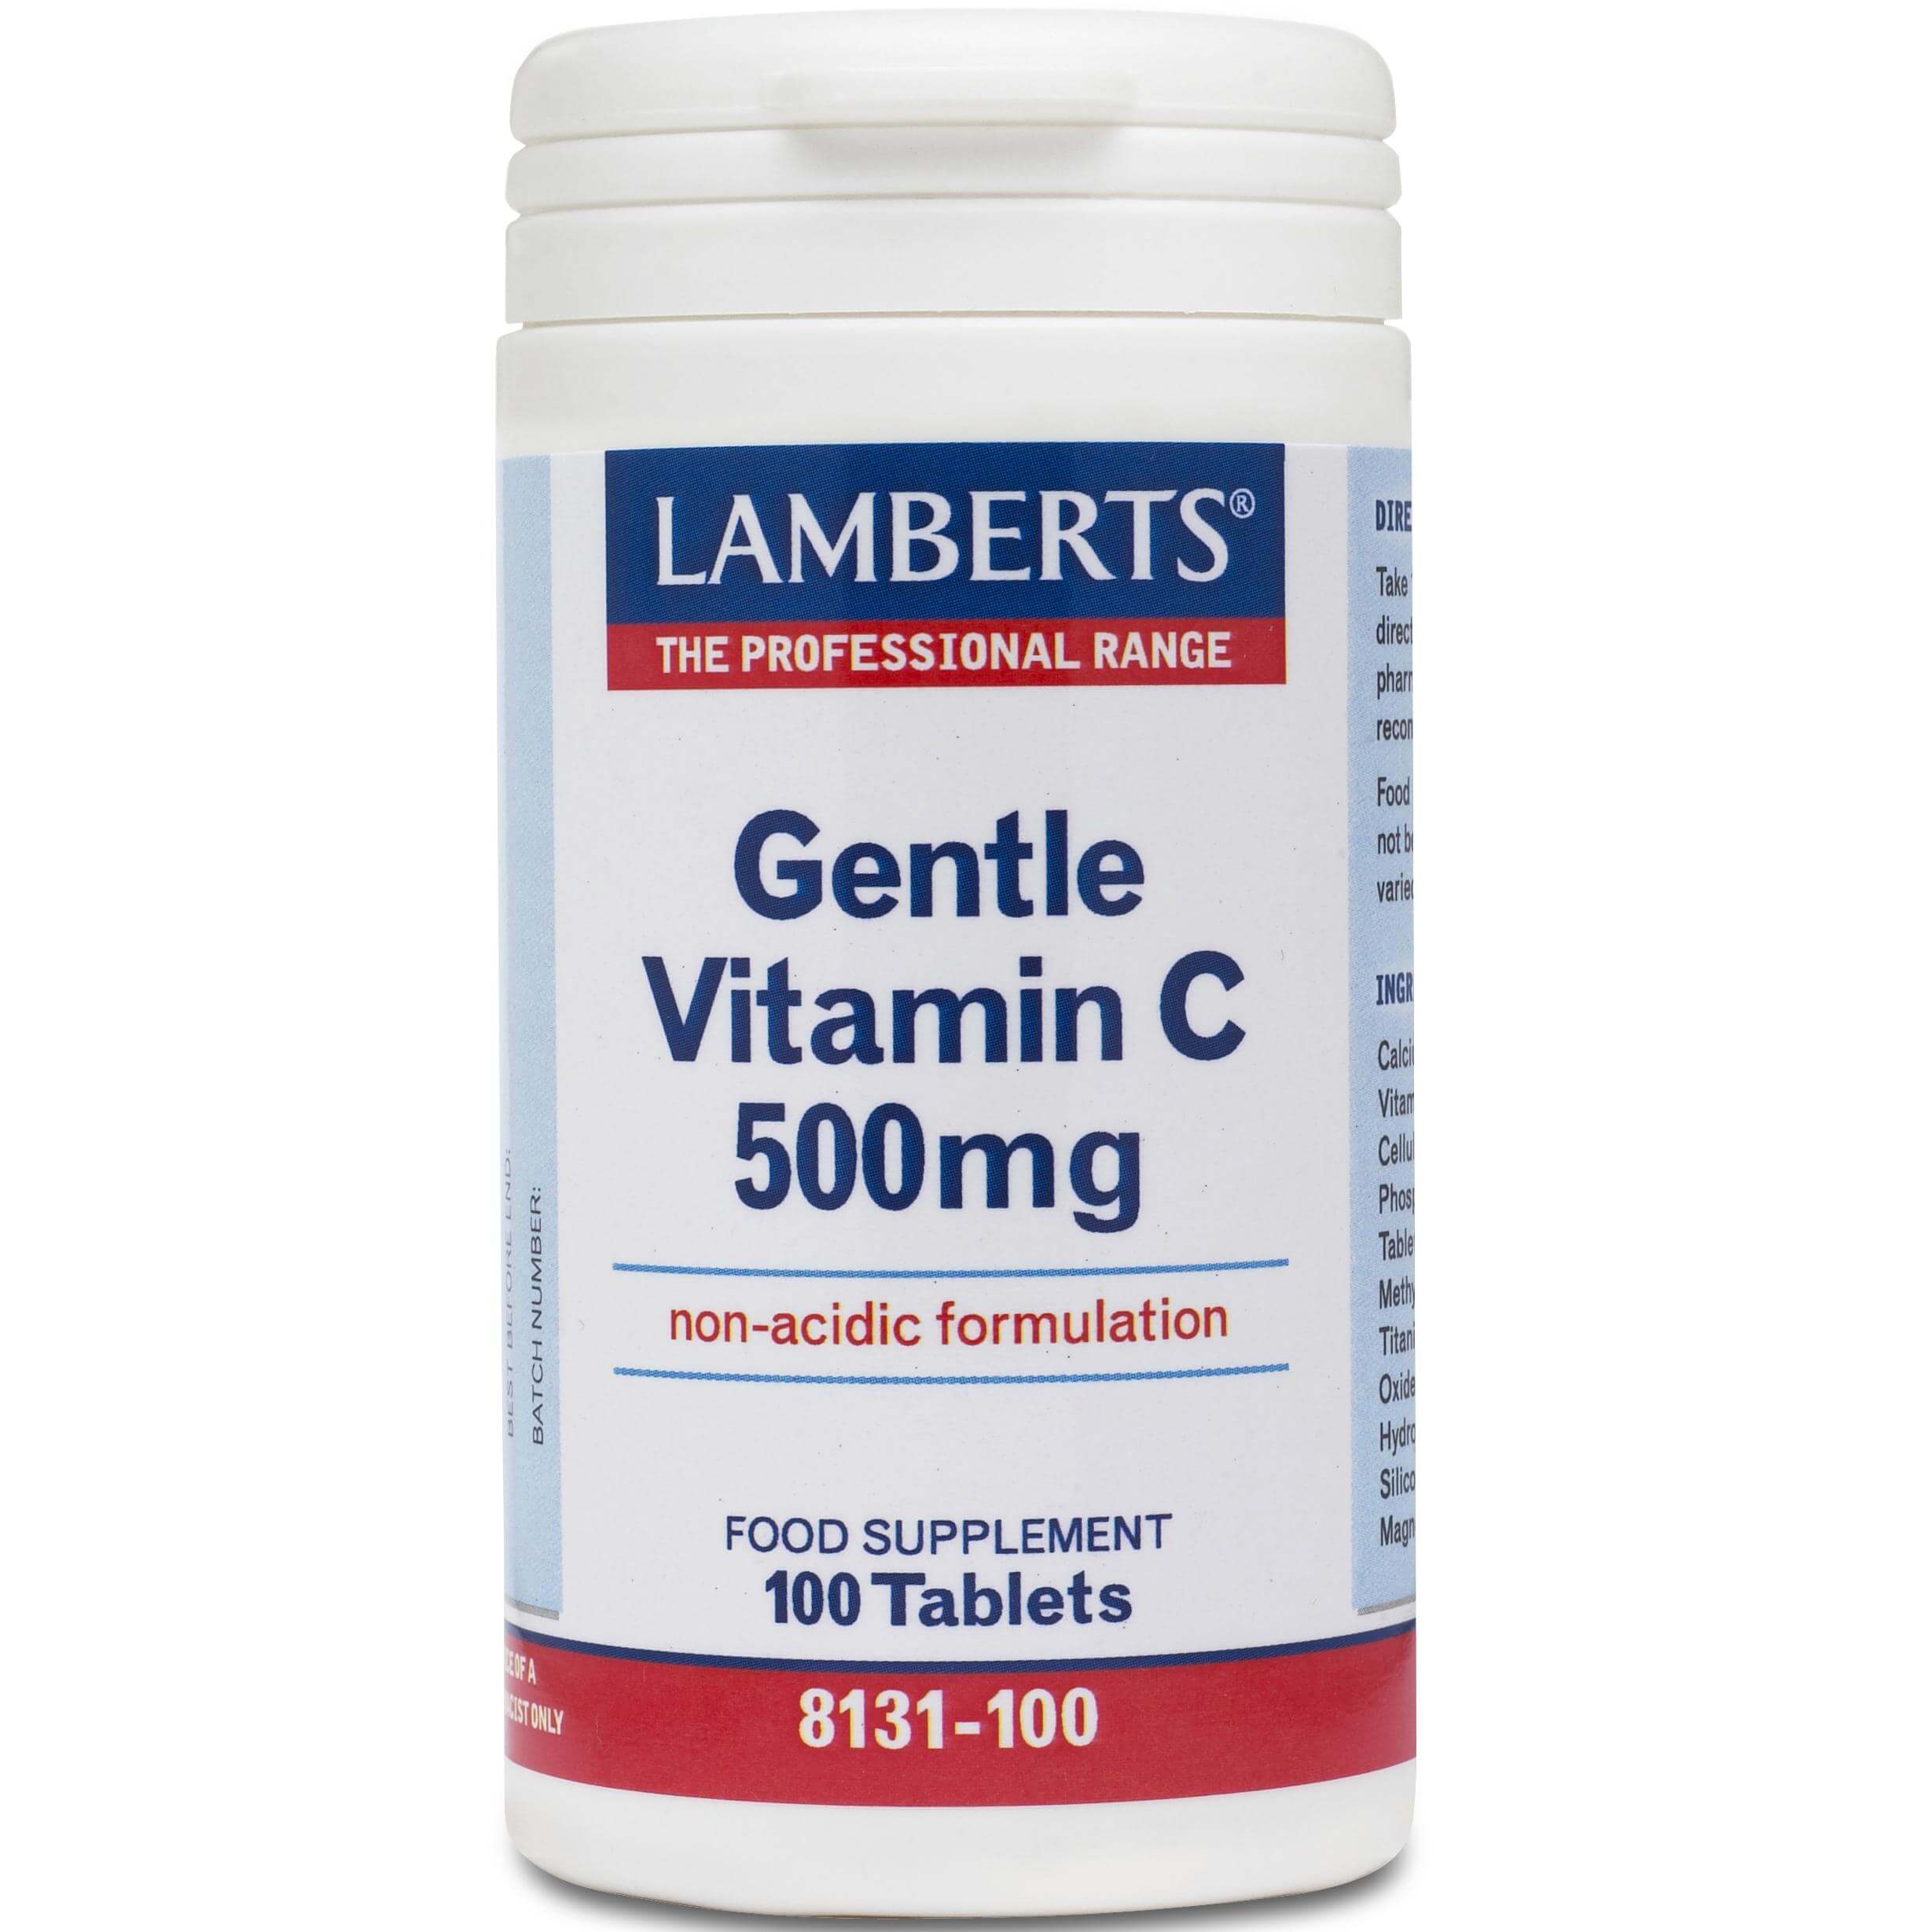 Gentle Vitamin C 500mg 100 tabs – Lamberts,Συμπλήρωμα Διατροφής Μη Όξινης και Πλήρως Απορροφήσιμη Μορφή Βιταμίνης C